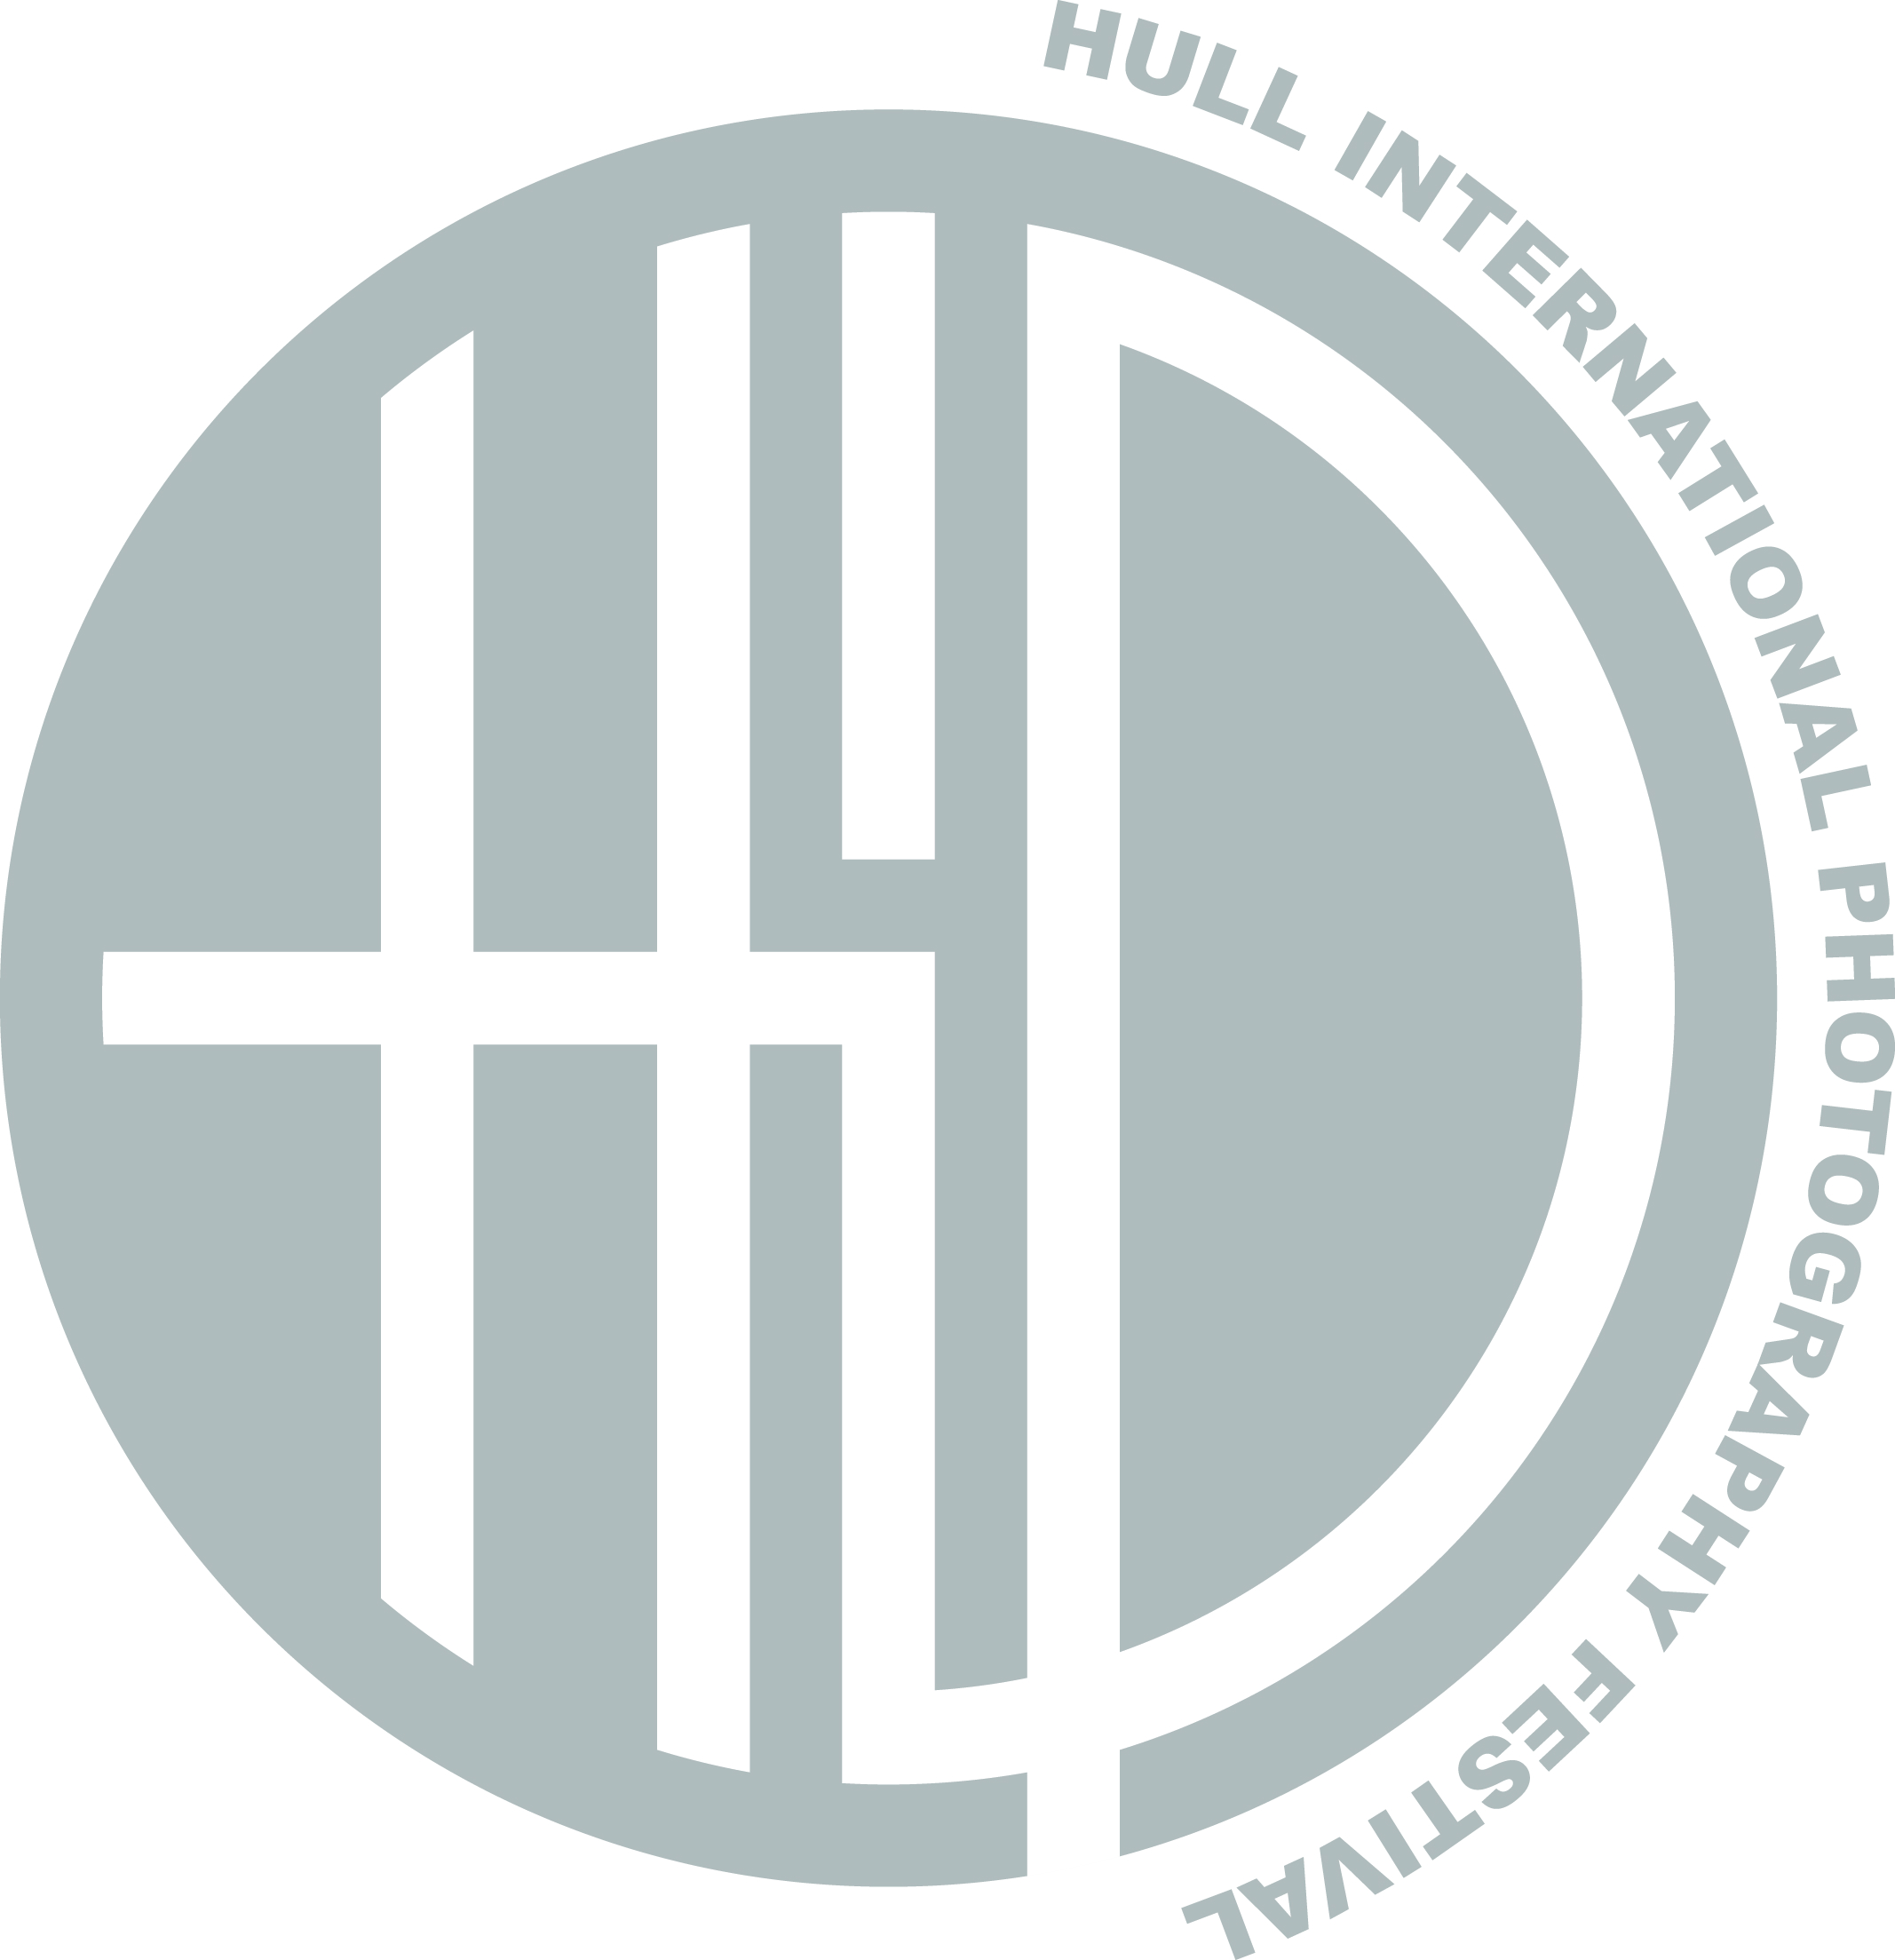 Hull International